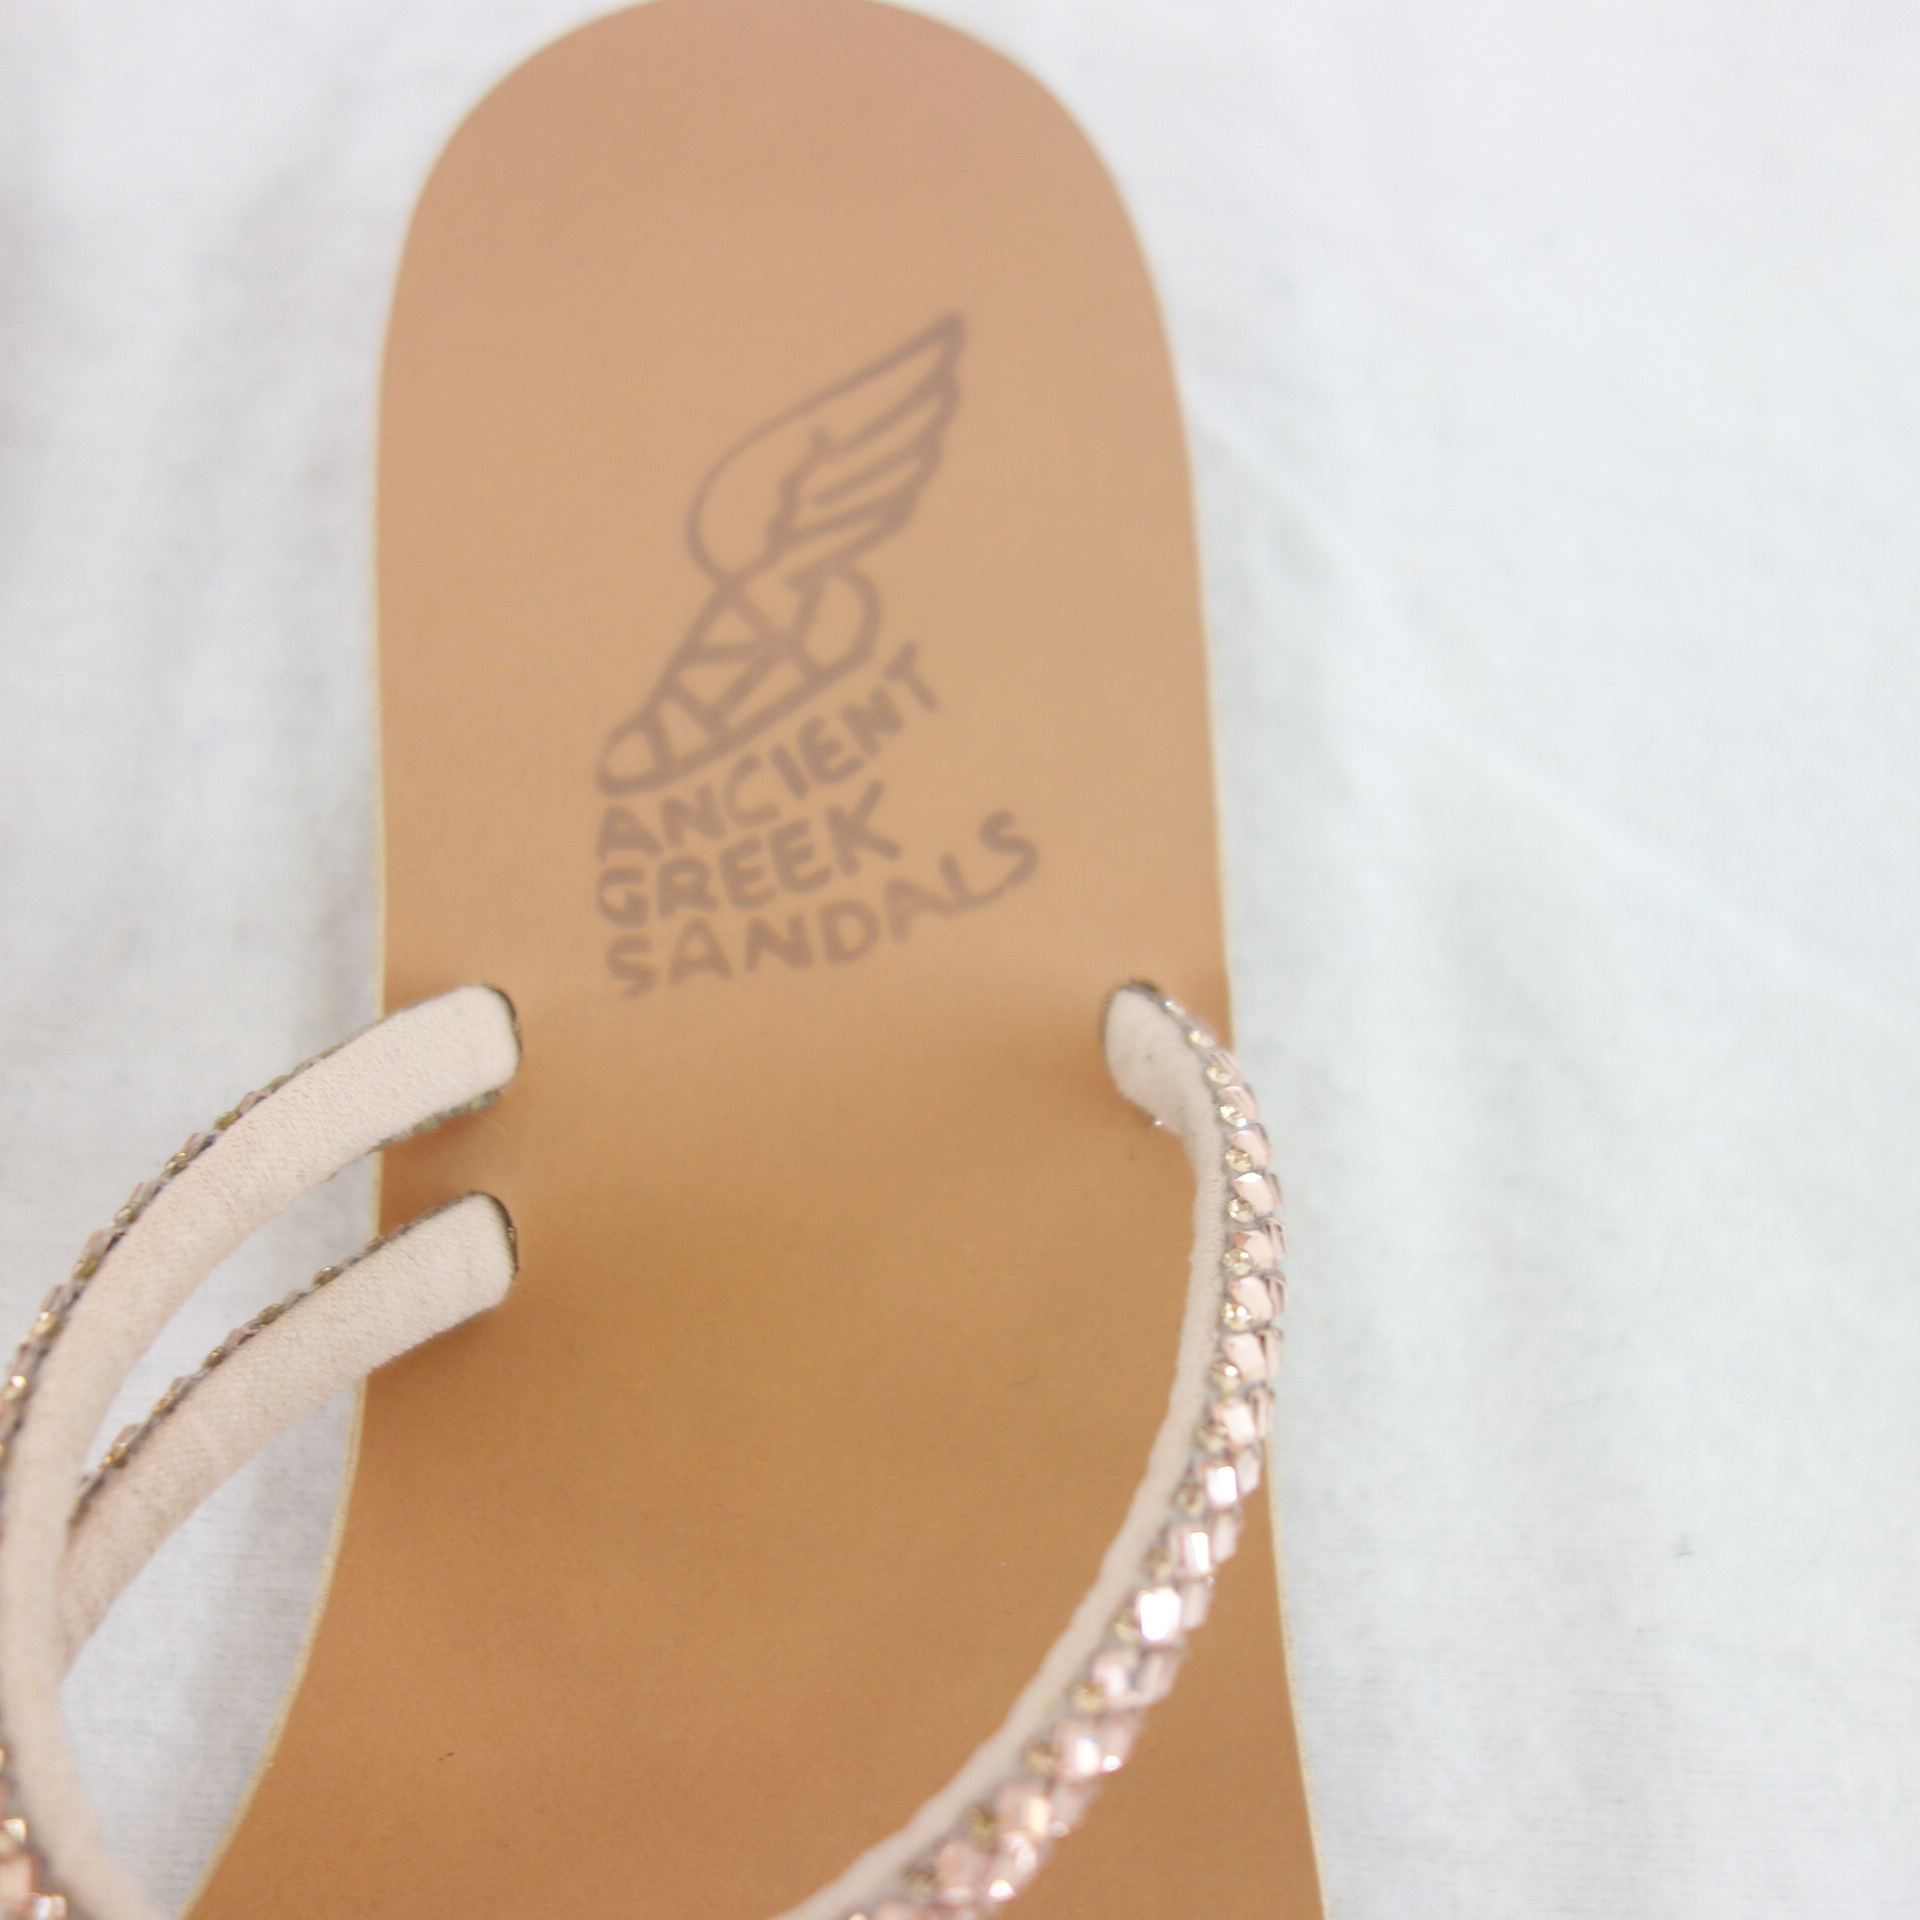 ANCIENT GREEK Sandals Riemchen Sandalen aus Leder Rose Gold 38 ( 37,5 )